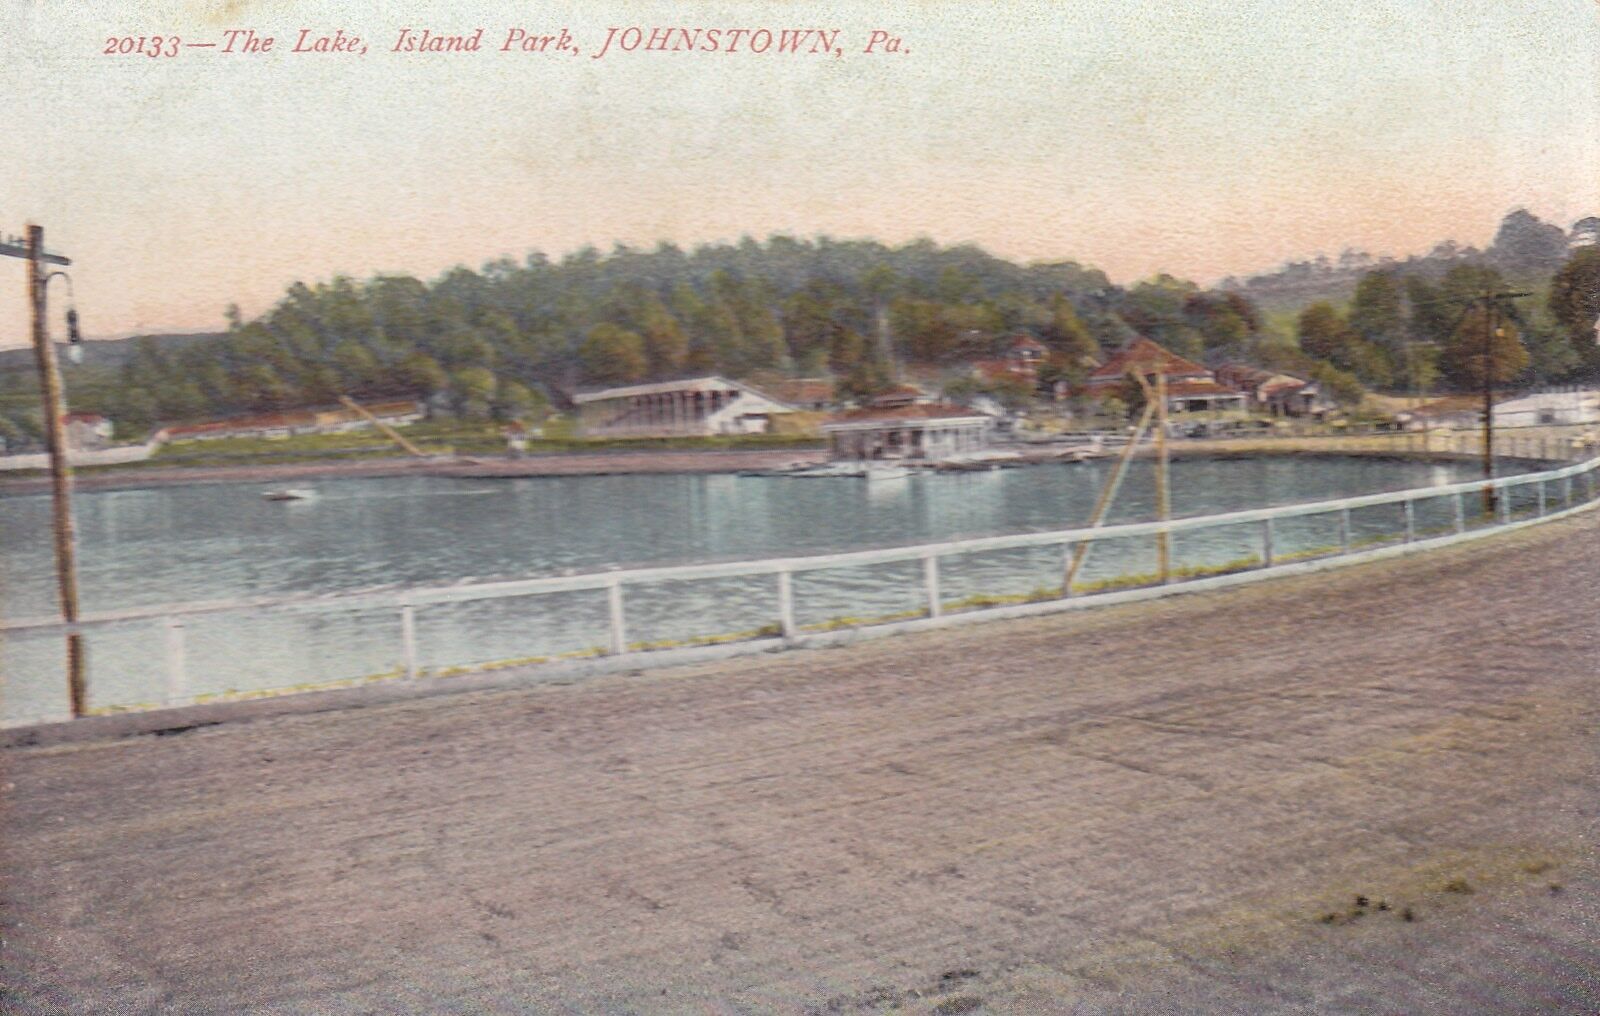 Johnstown, Pa - The Lake, Island Park